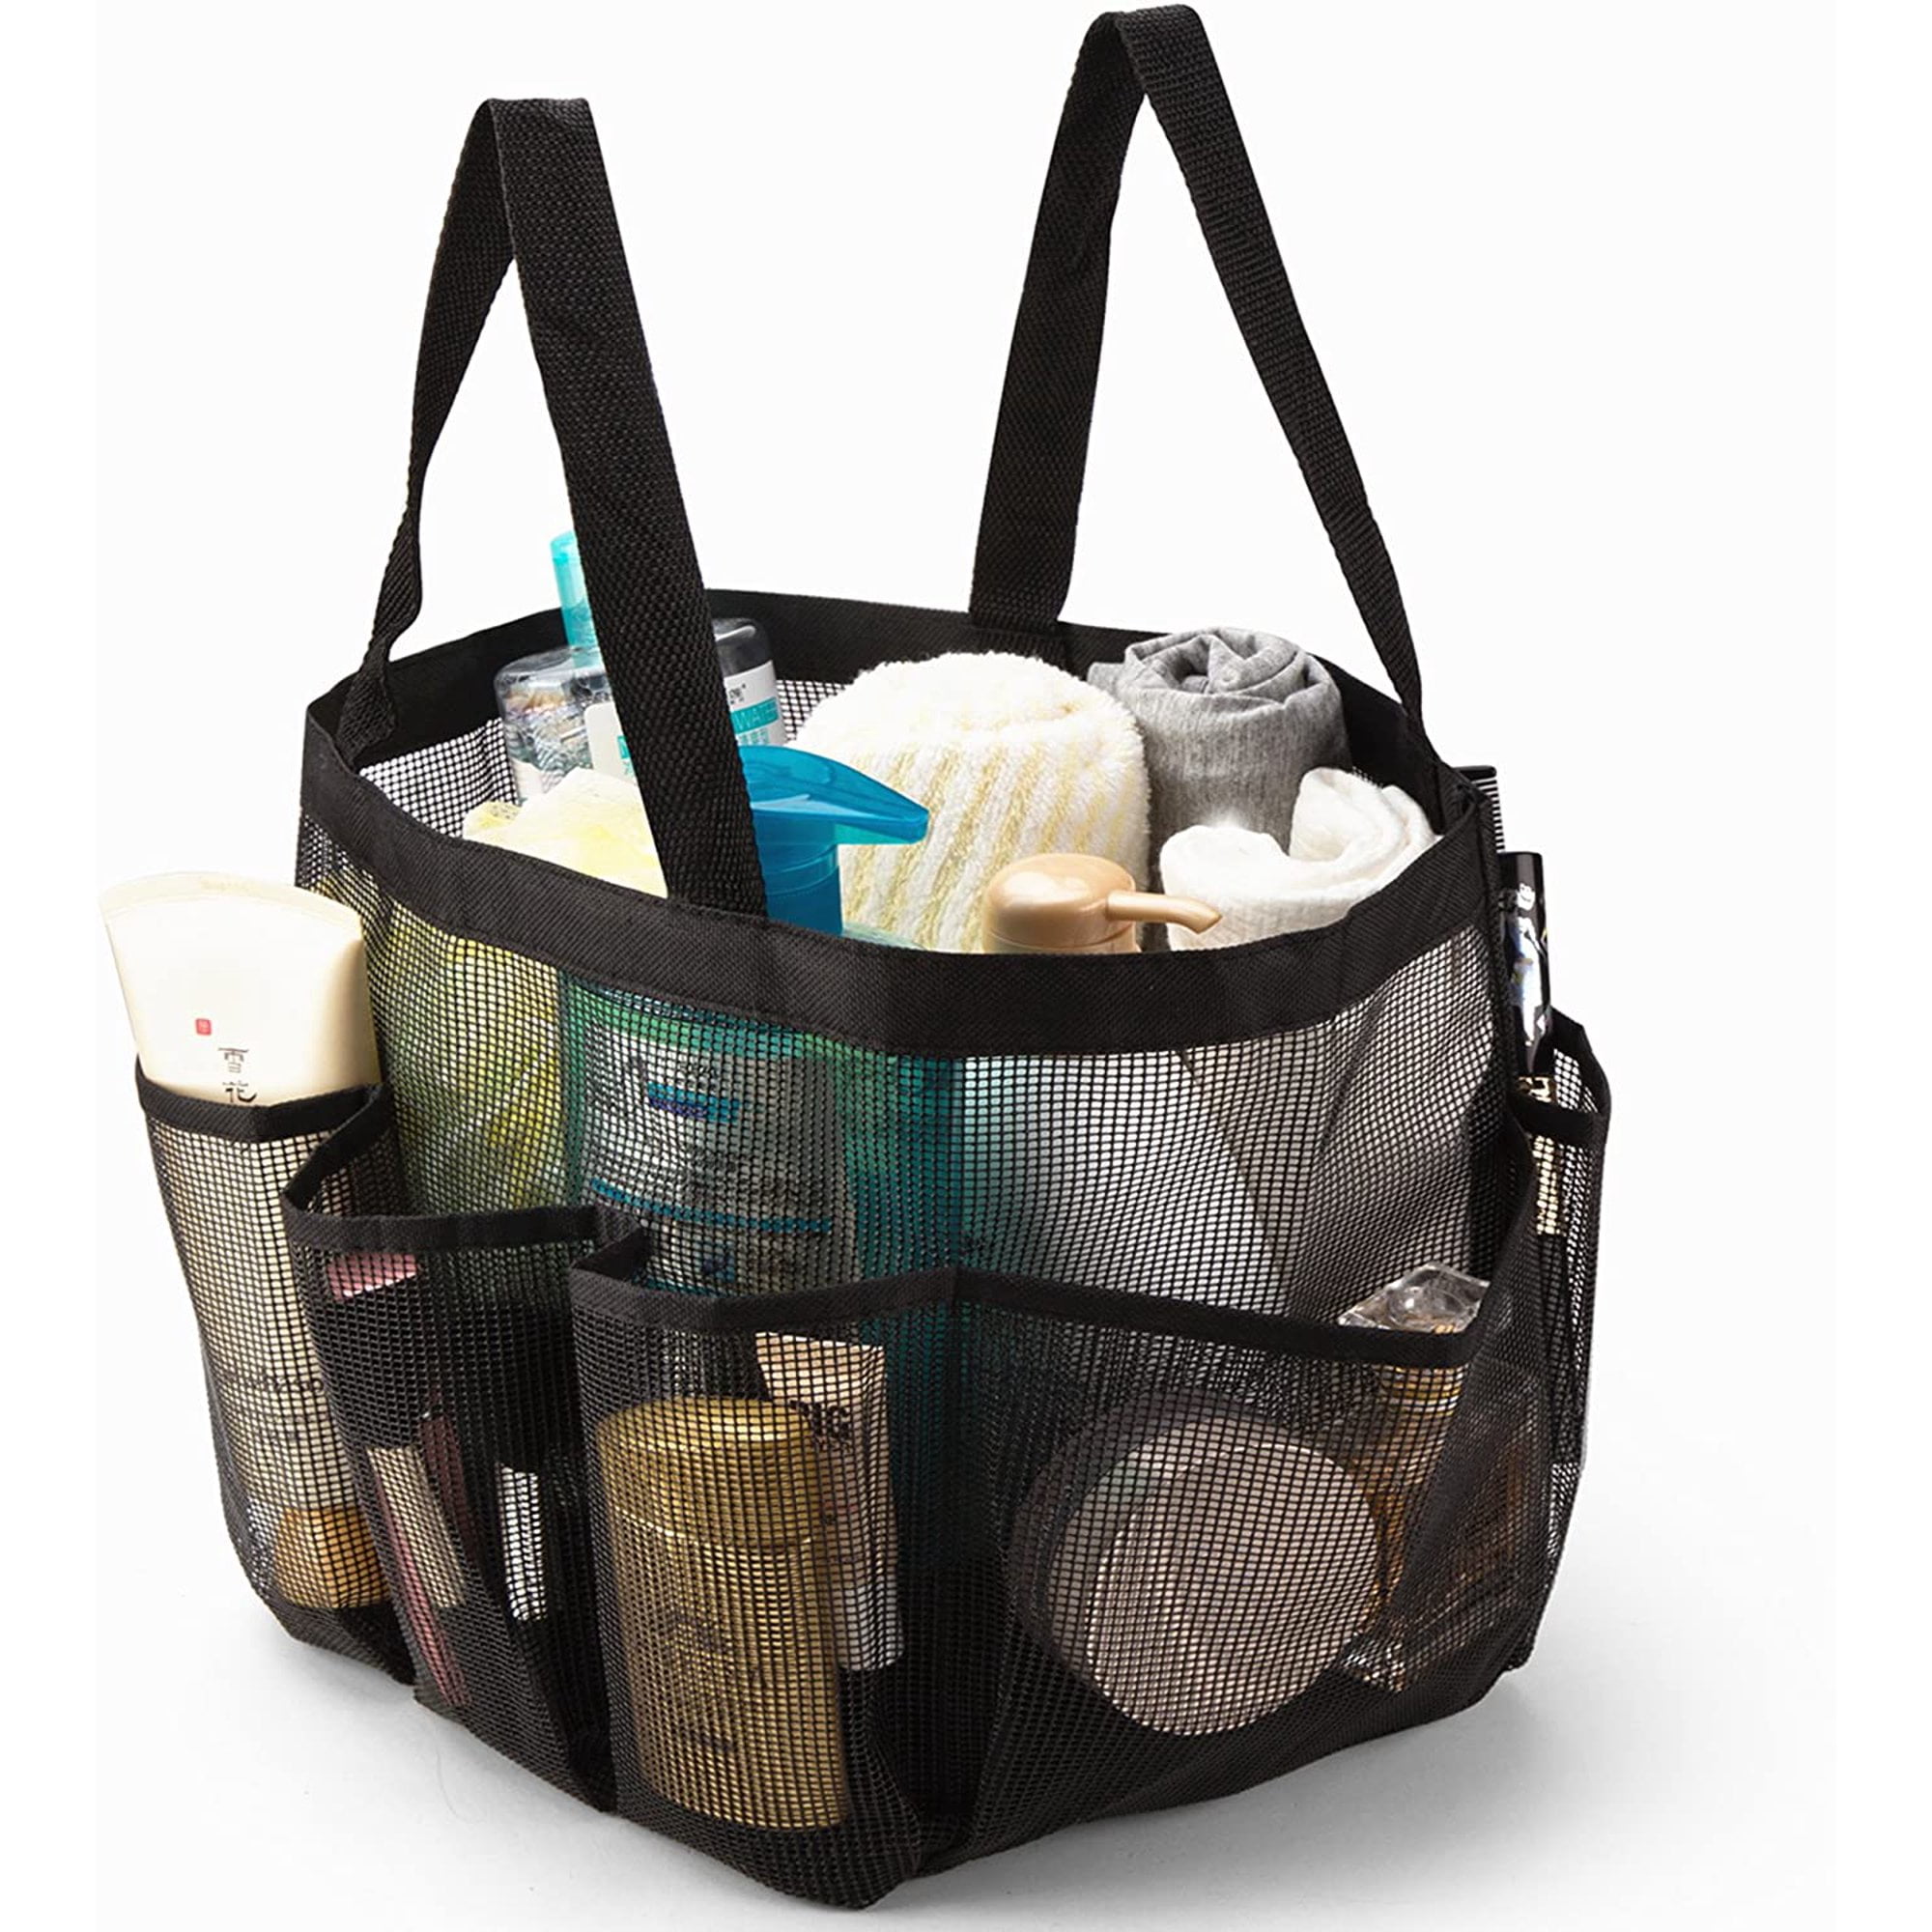 1pc Bathroom Storage Basket, Shower Caddy, Dormitory Organizer